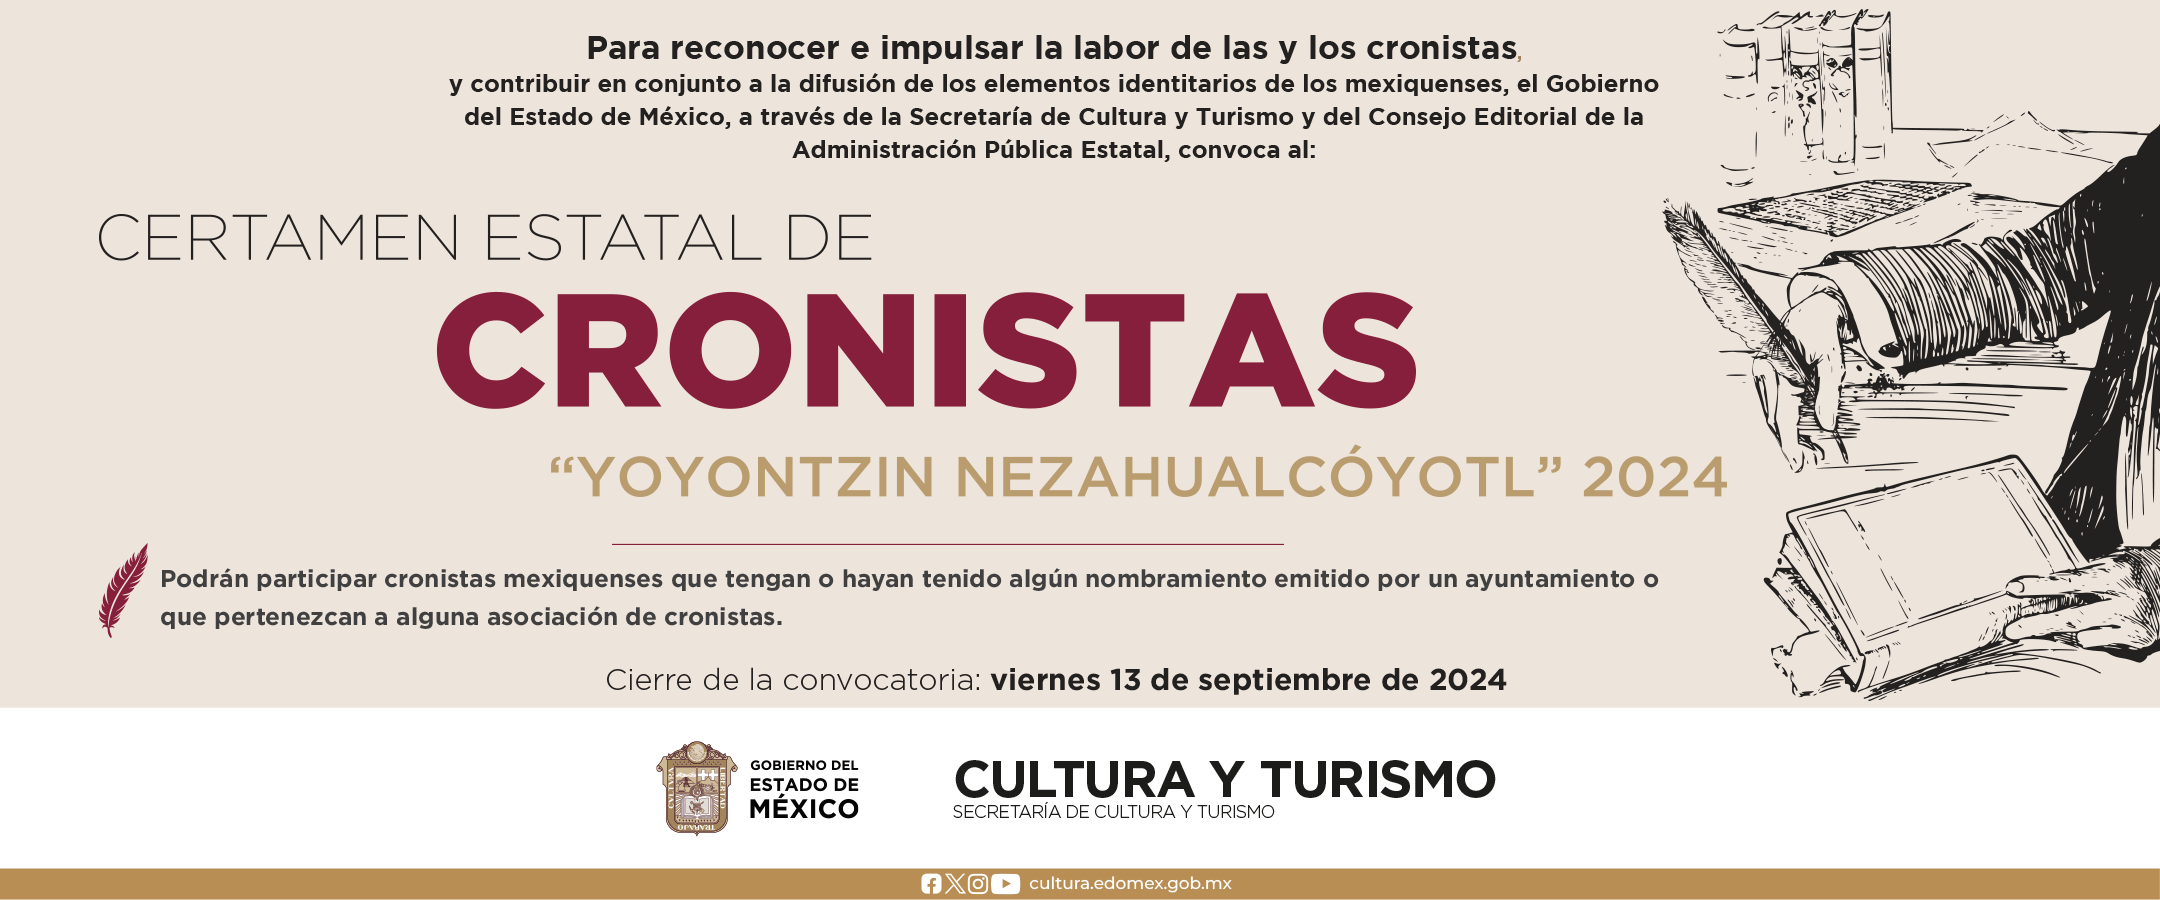 Certamen Estatal de Cronistas “Yoyontzin Nezahualcóyotl” 2024